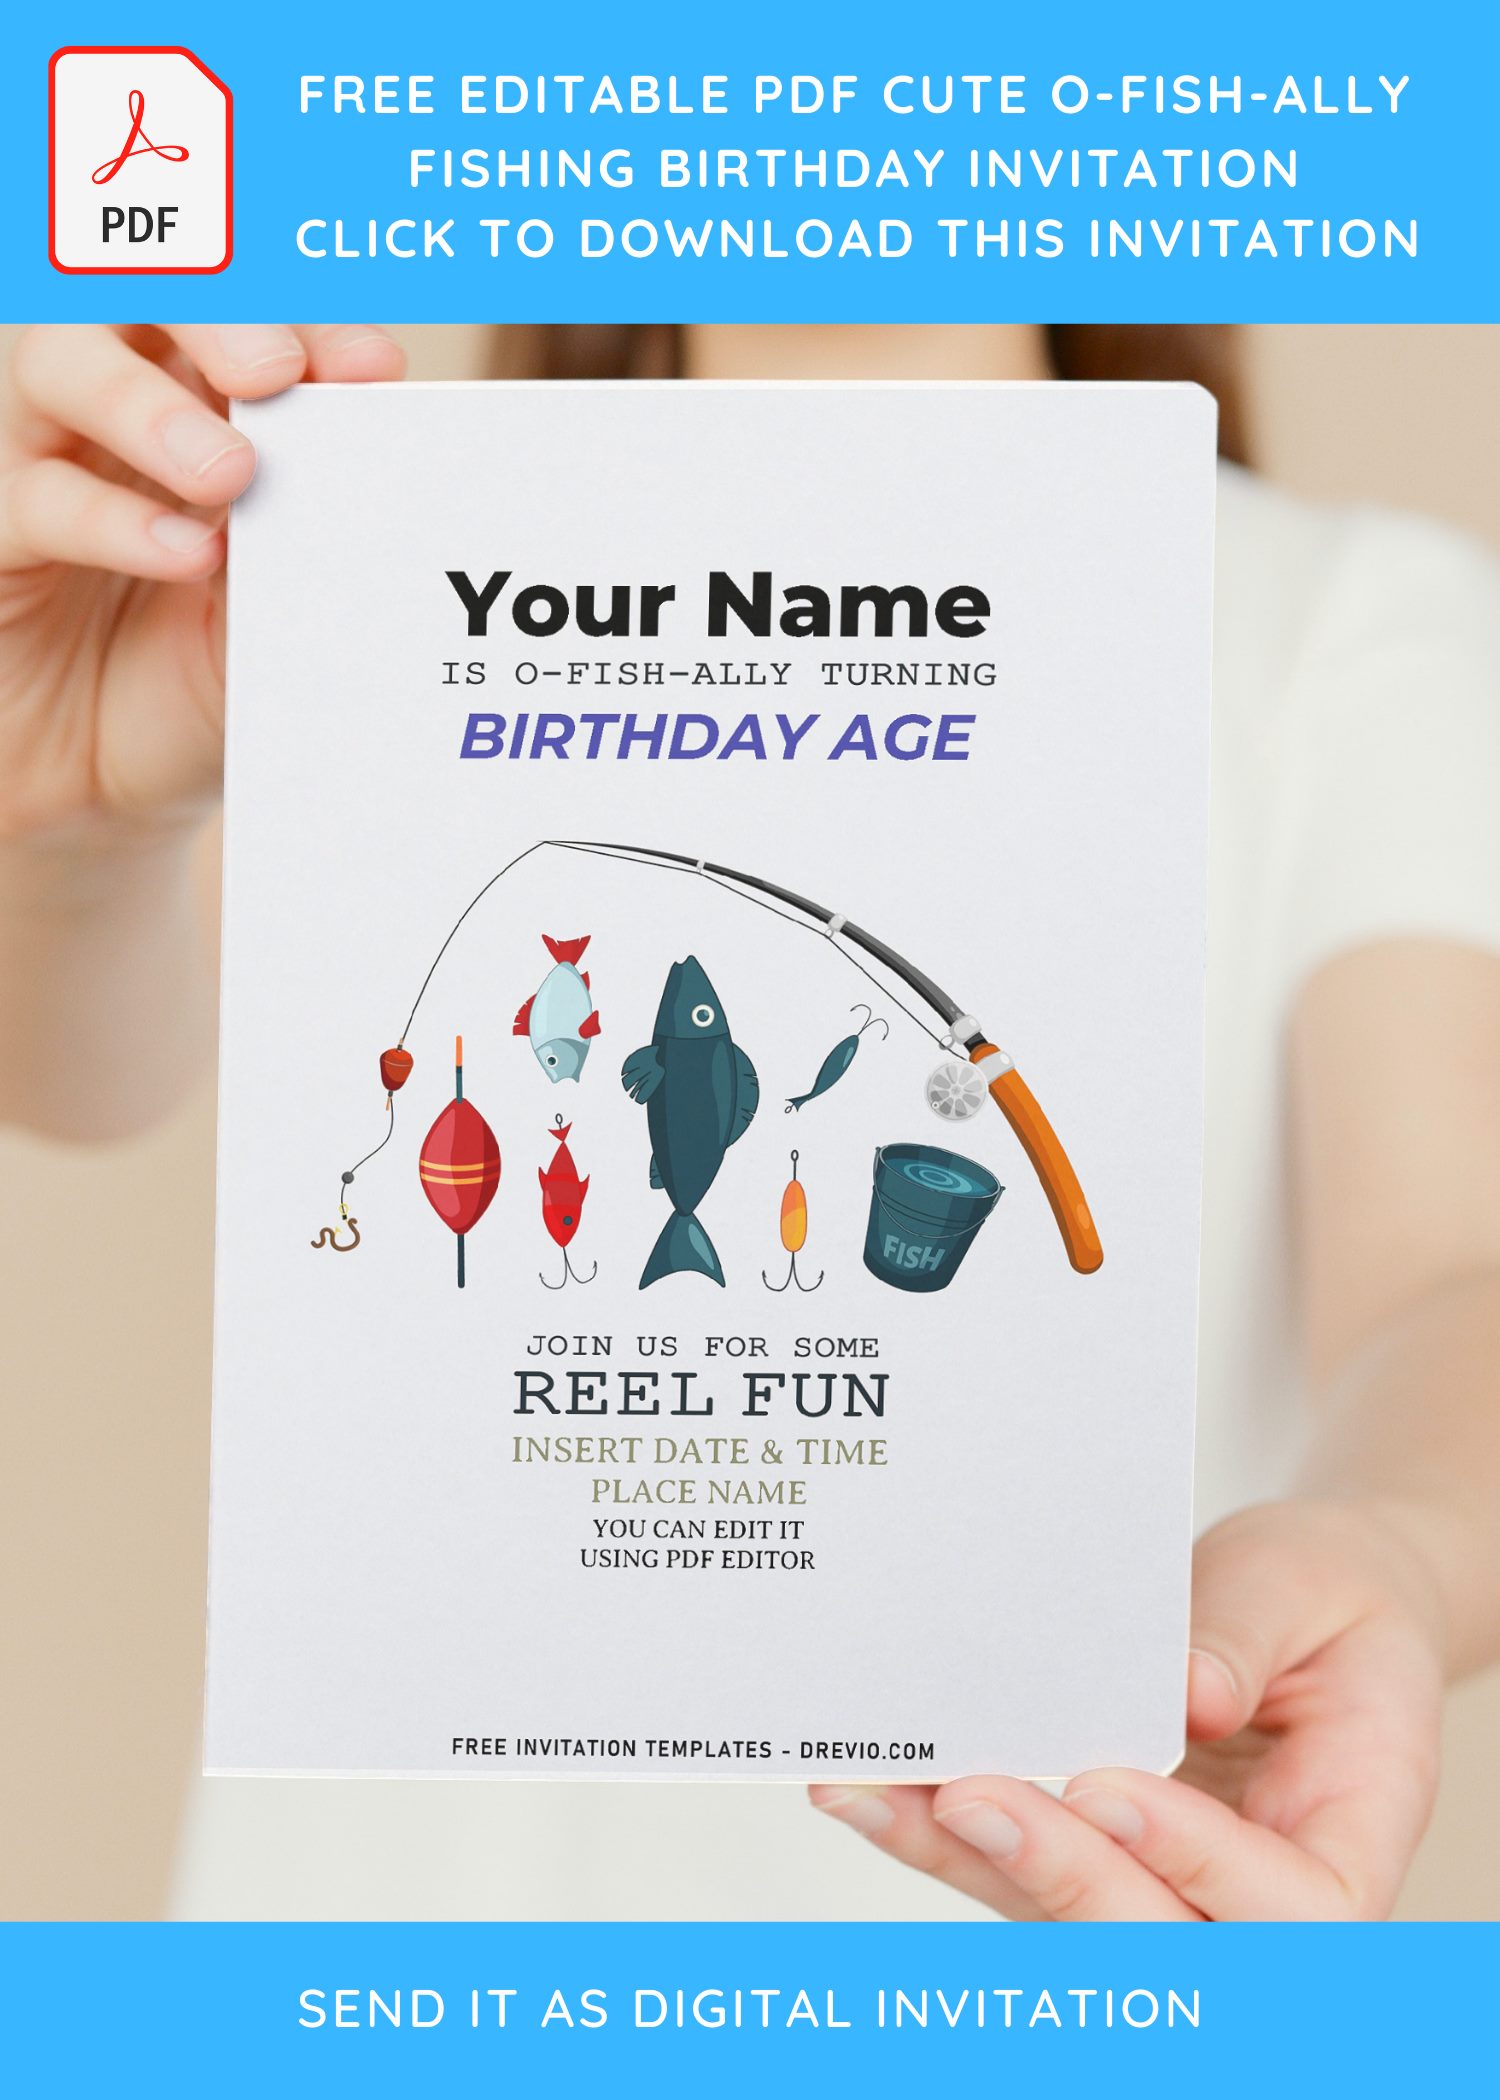 Free Editable PDF) Watercolor Fishing Themed Birthday Invitation